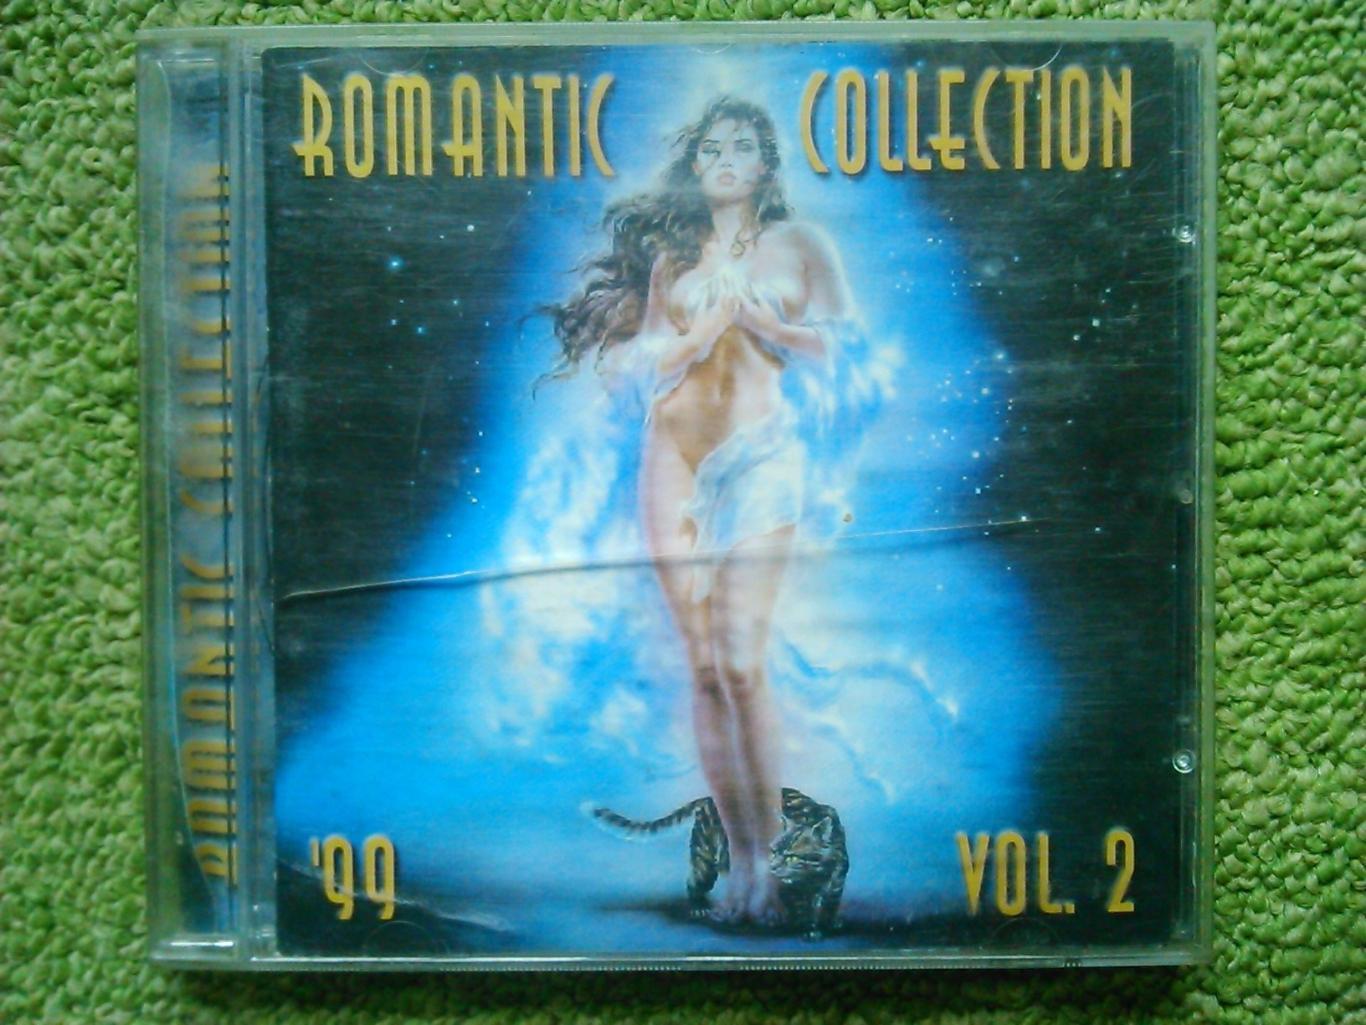 Audio CD ROMANTIC COLLECTION99.Vol 2. Оптом скидки до 50%!